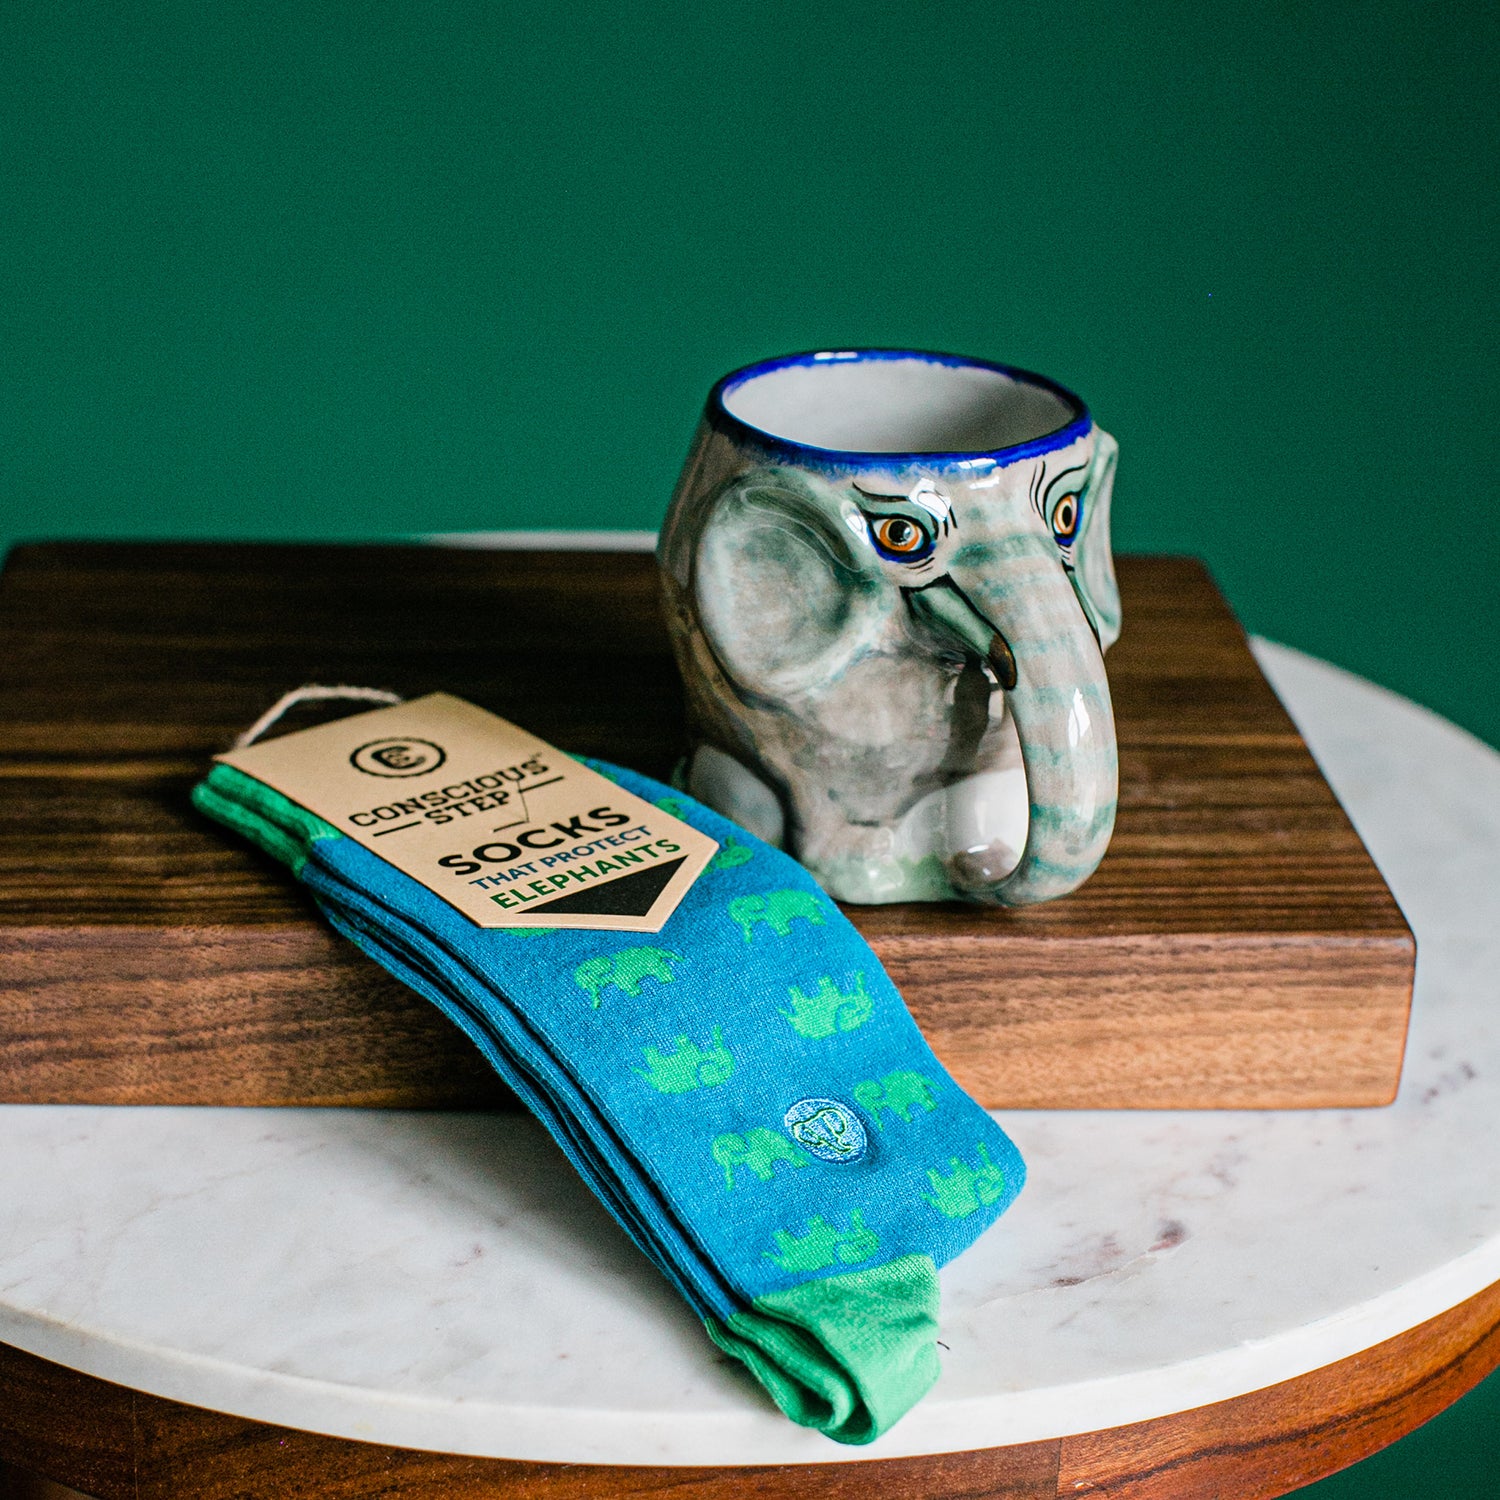 Elephant Lover's Coffee Mug and socks